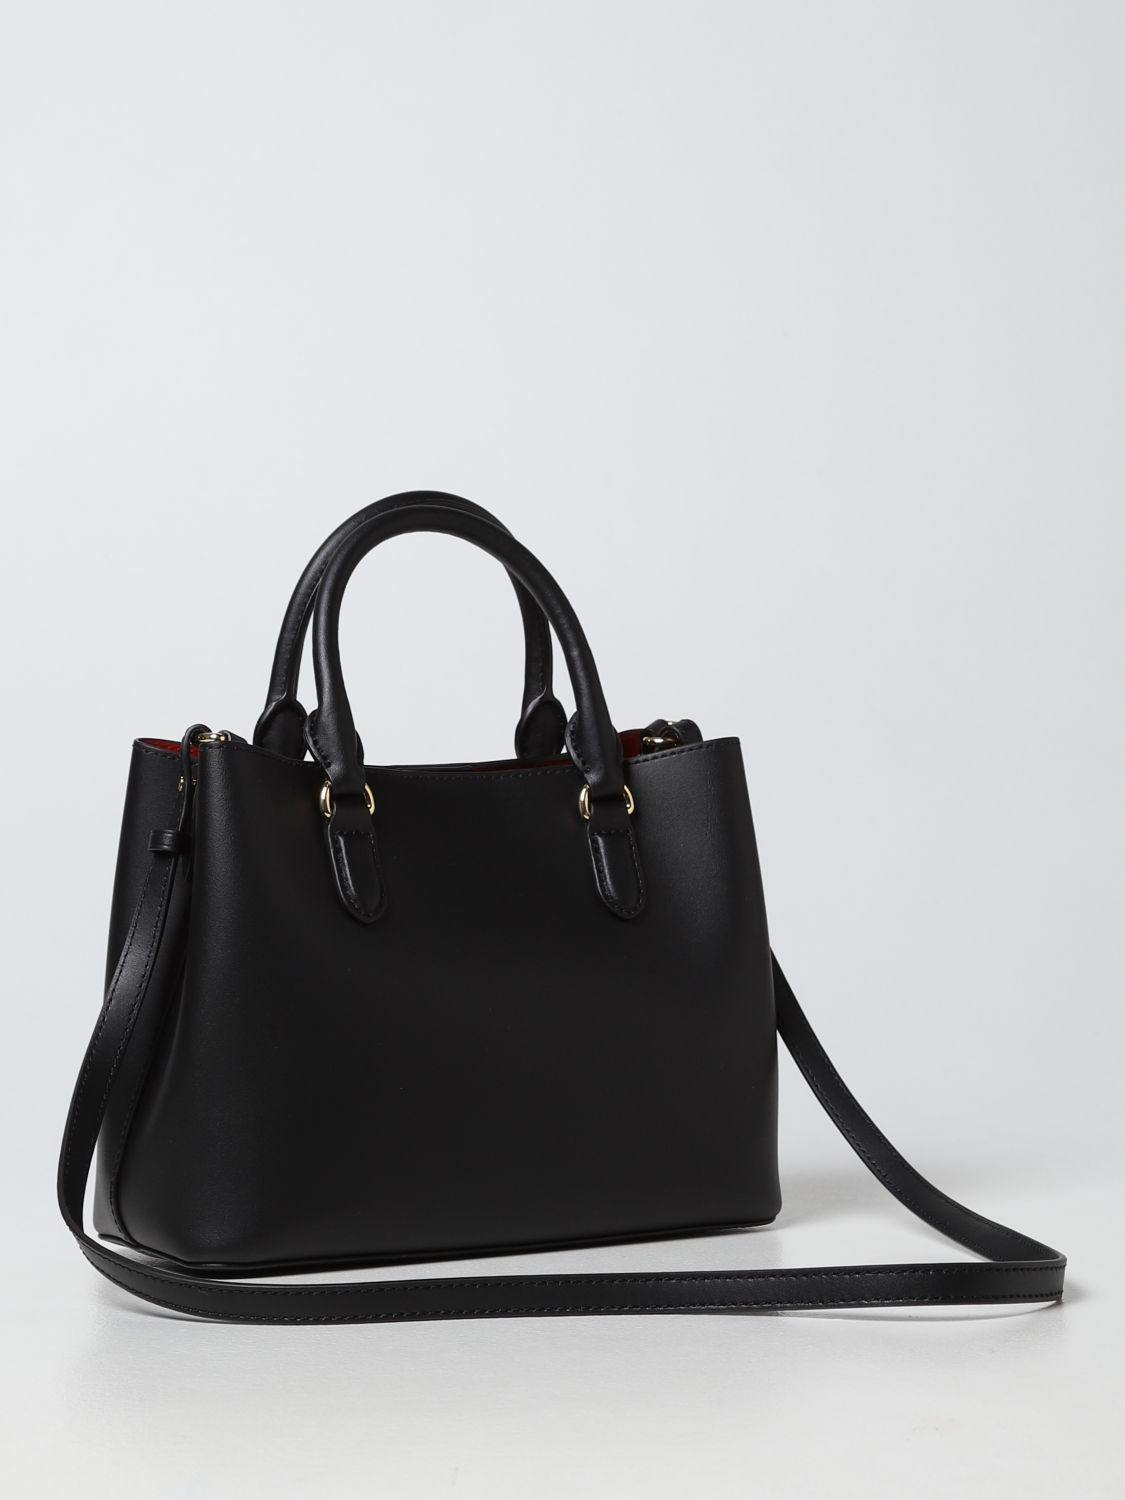 POLO RALPH LAUREN: leather handbag - Black | Polo Ralph Lauren tote ...